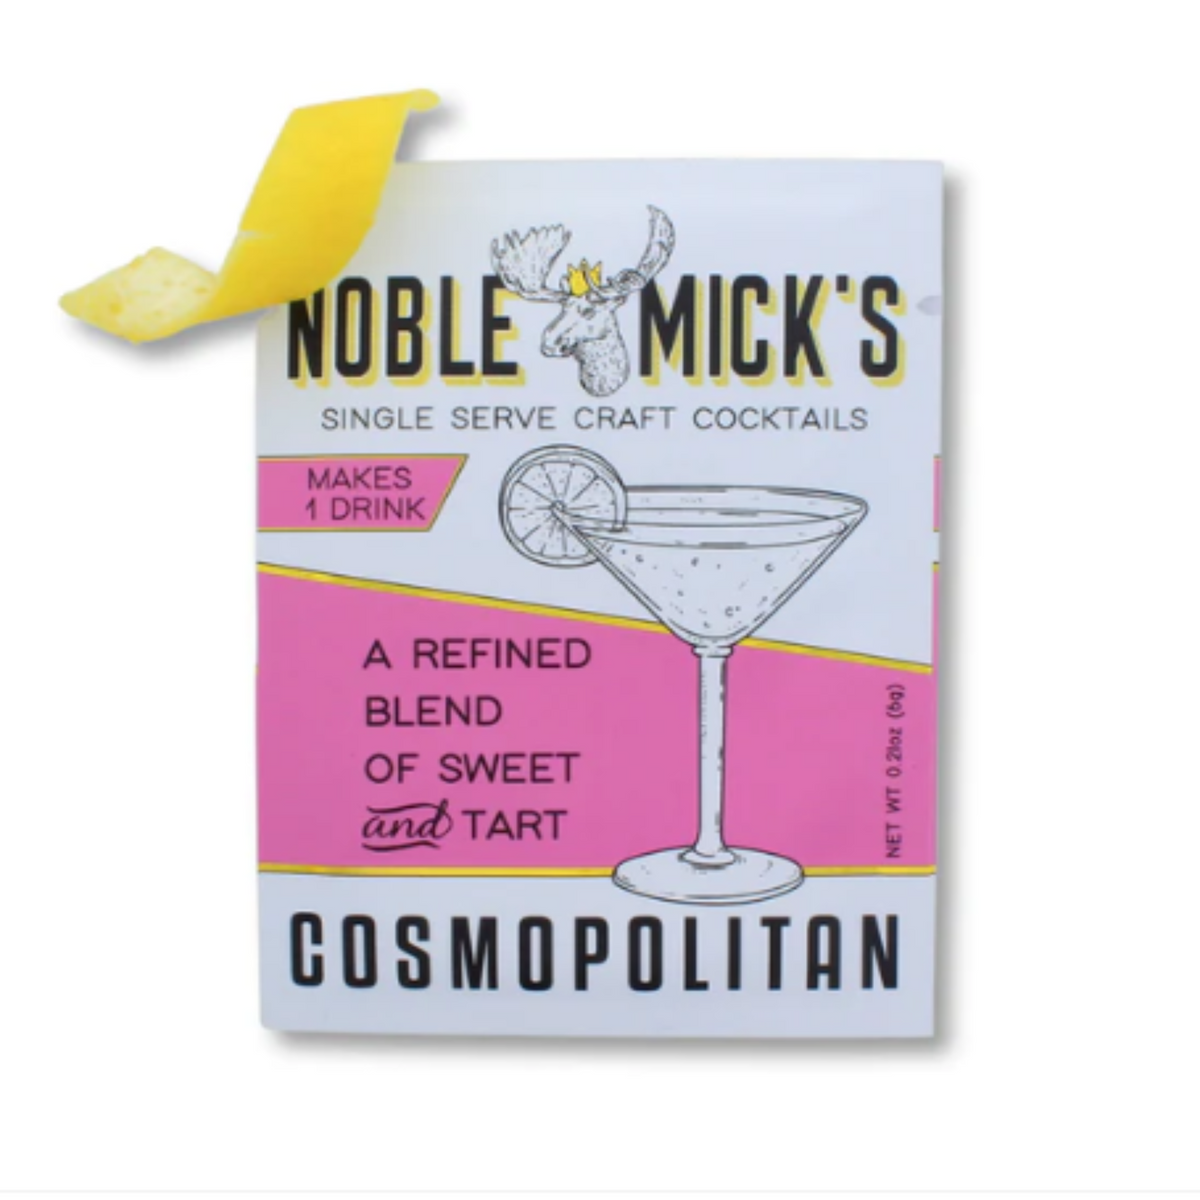 Cosmopolitan - single serve craft cocktails